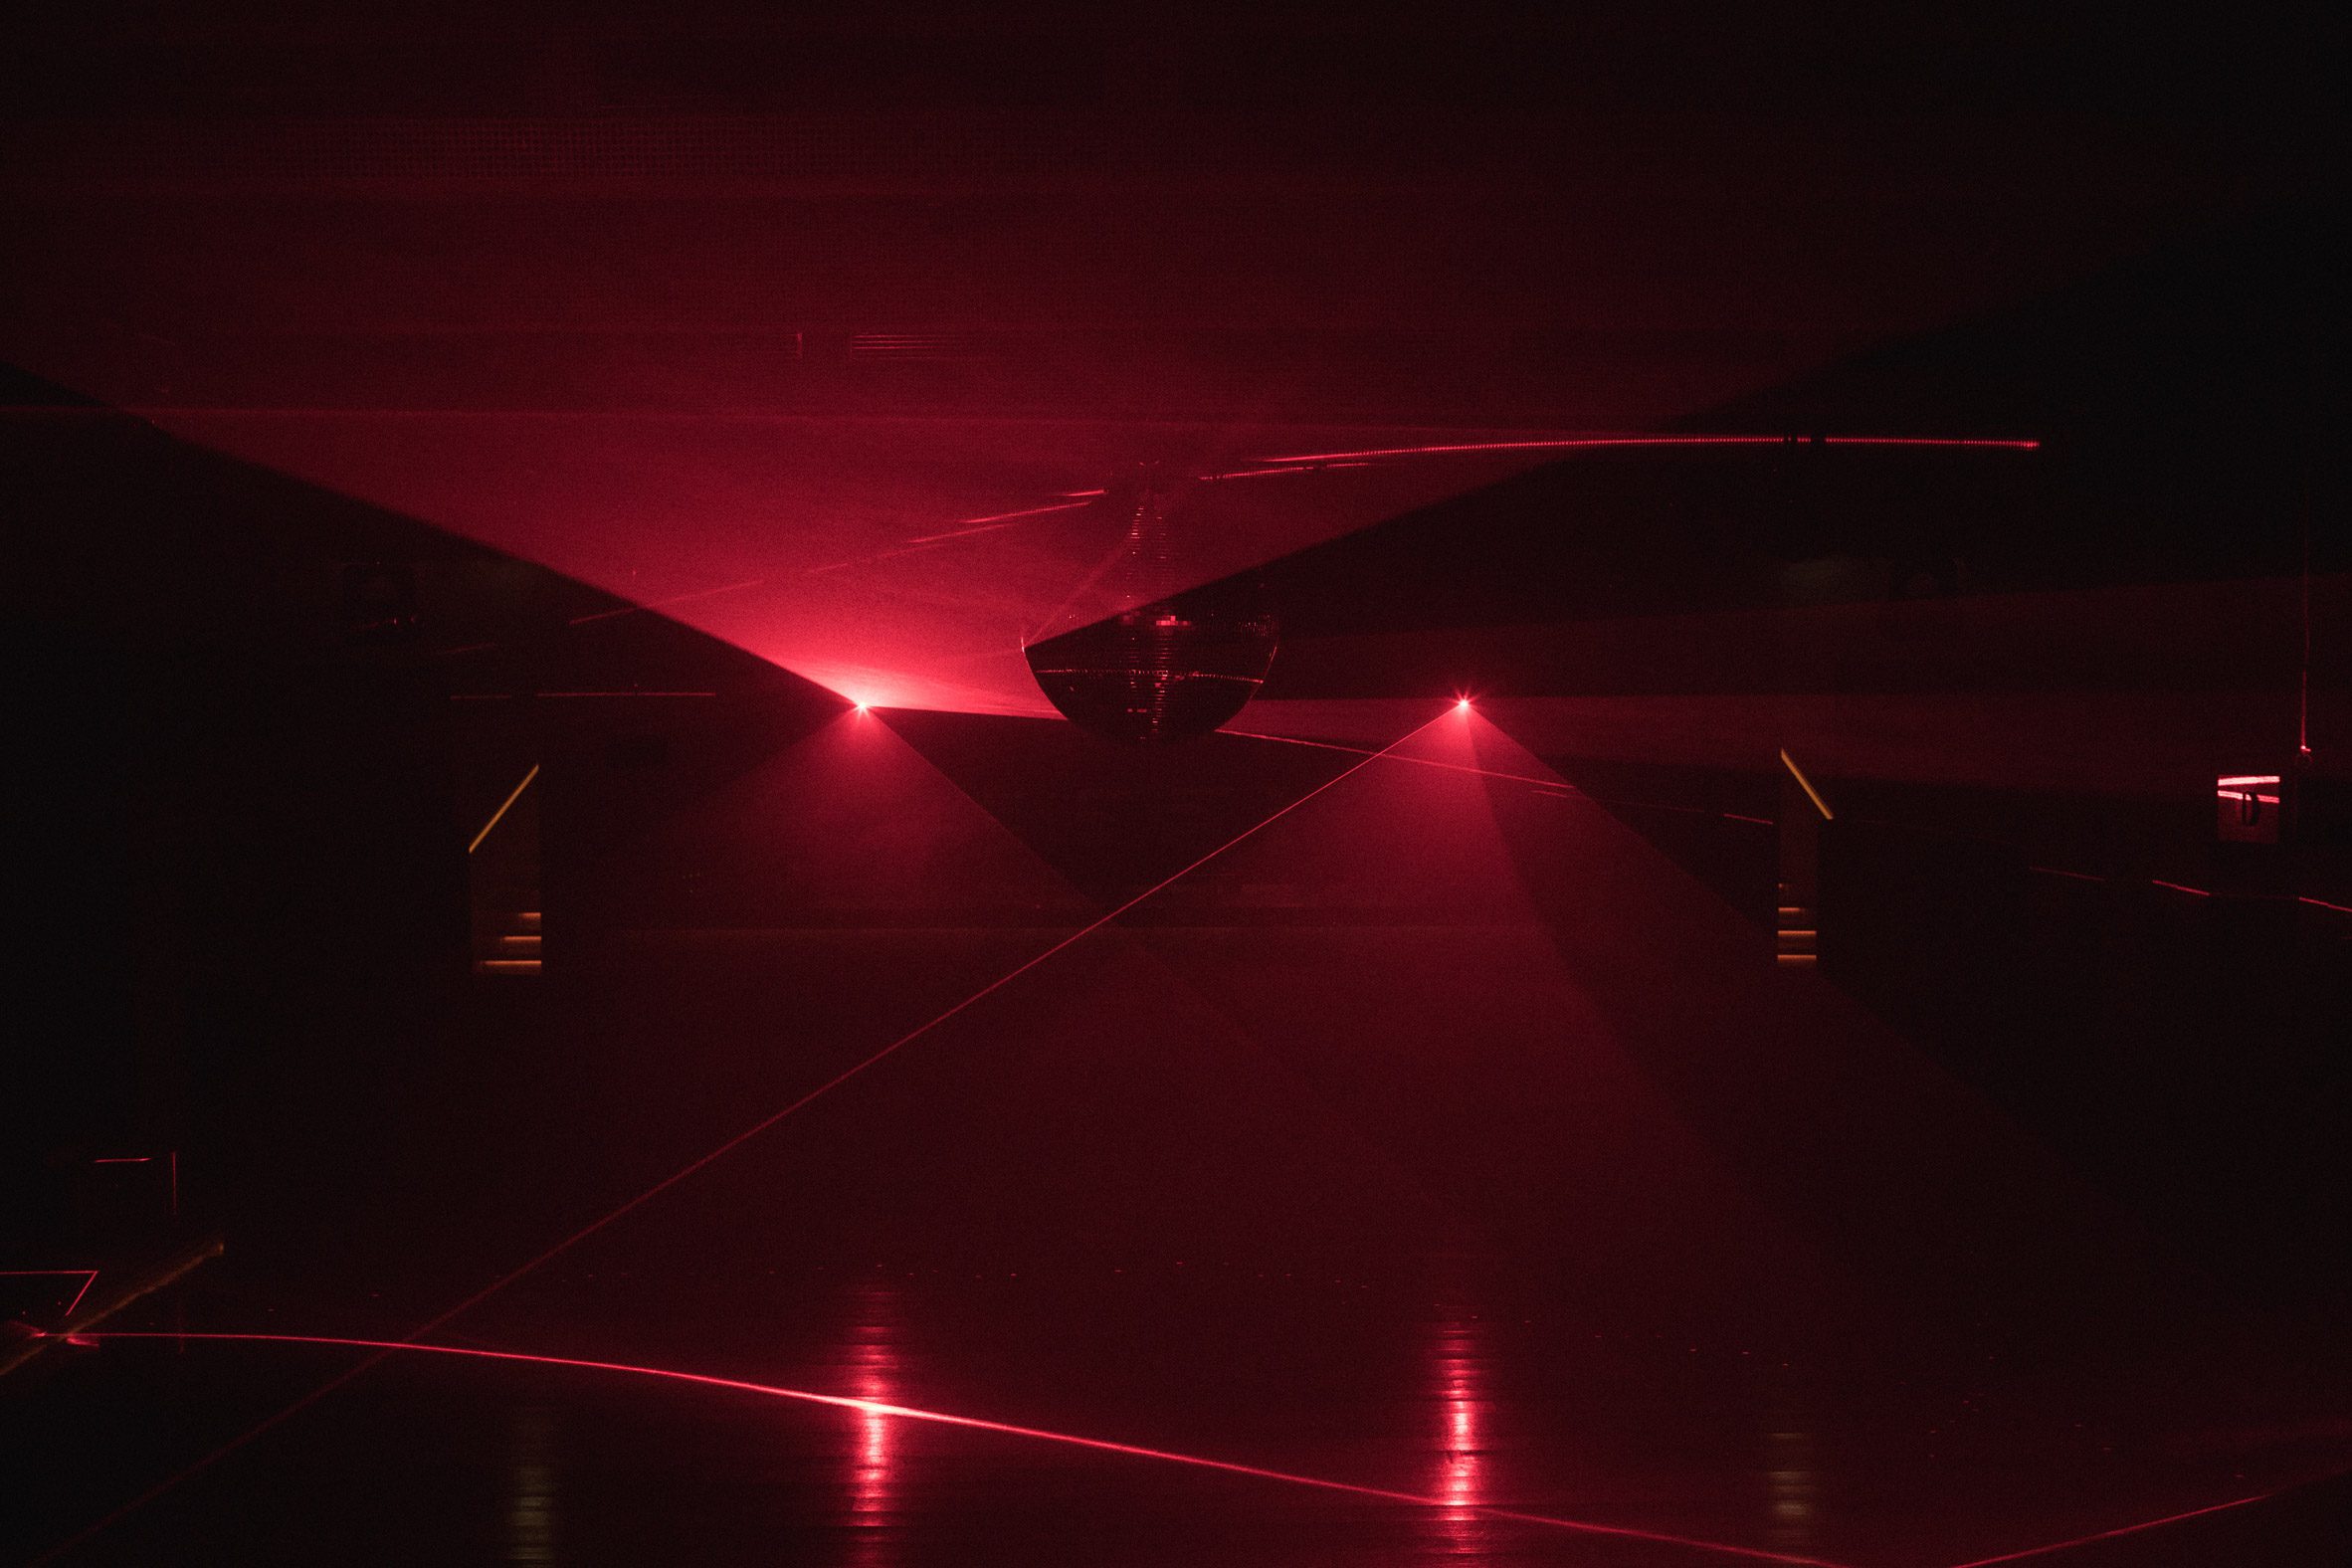 Dark nightclub with red laser lighting